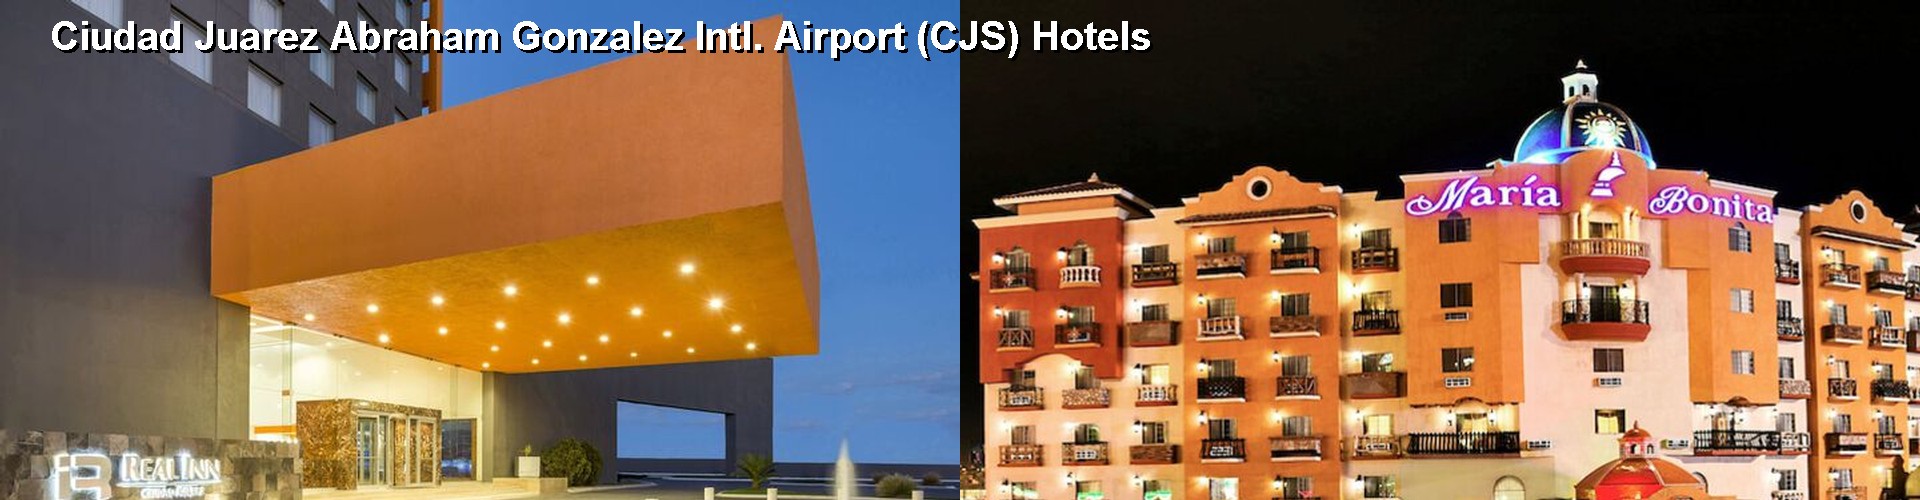 5 Best Hotels near Ciudad Juarez Abraham Gonzalez Intl. Airport (CJS)